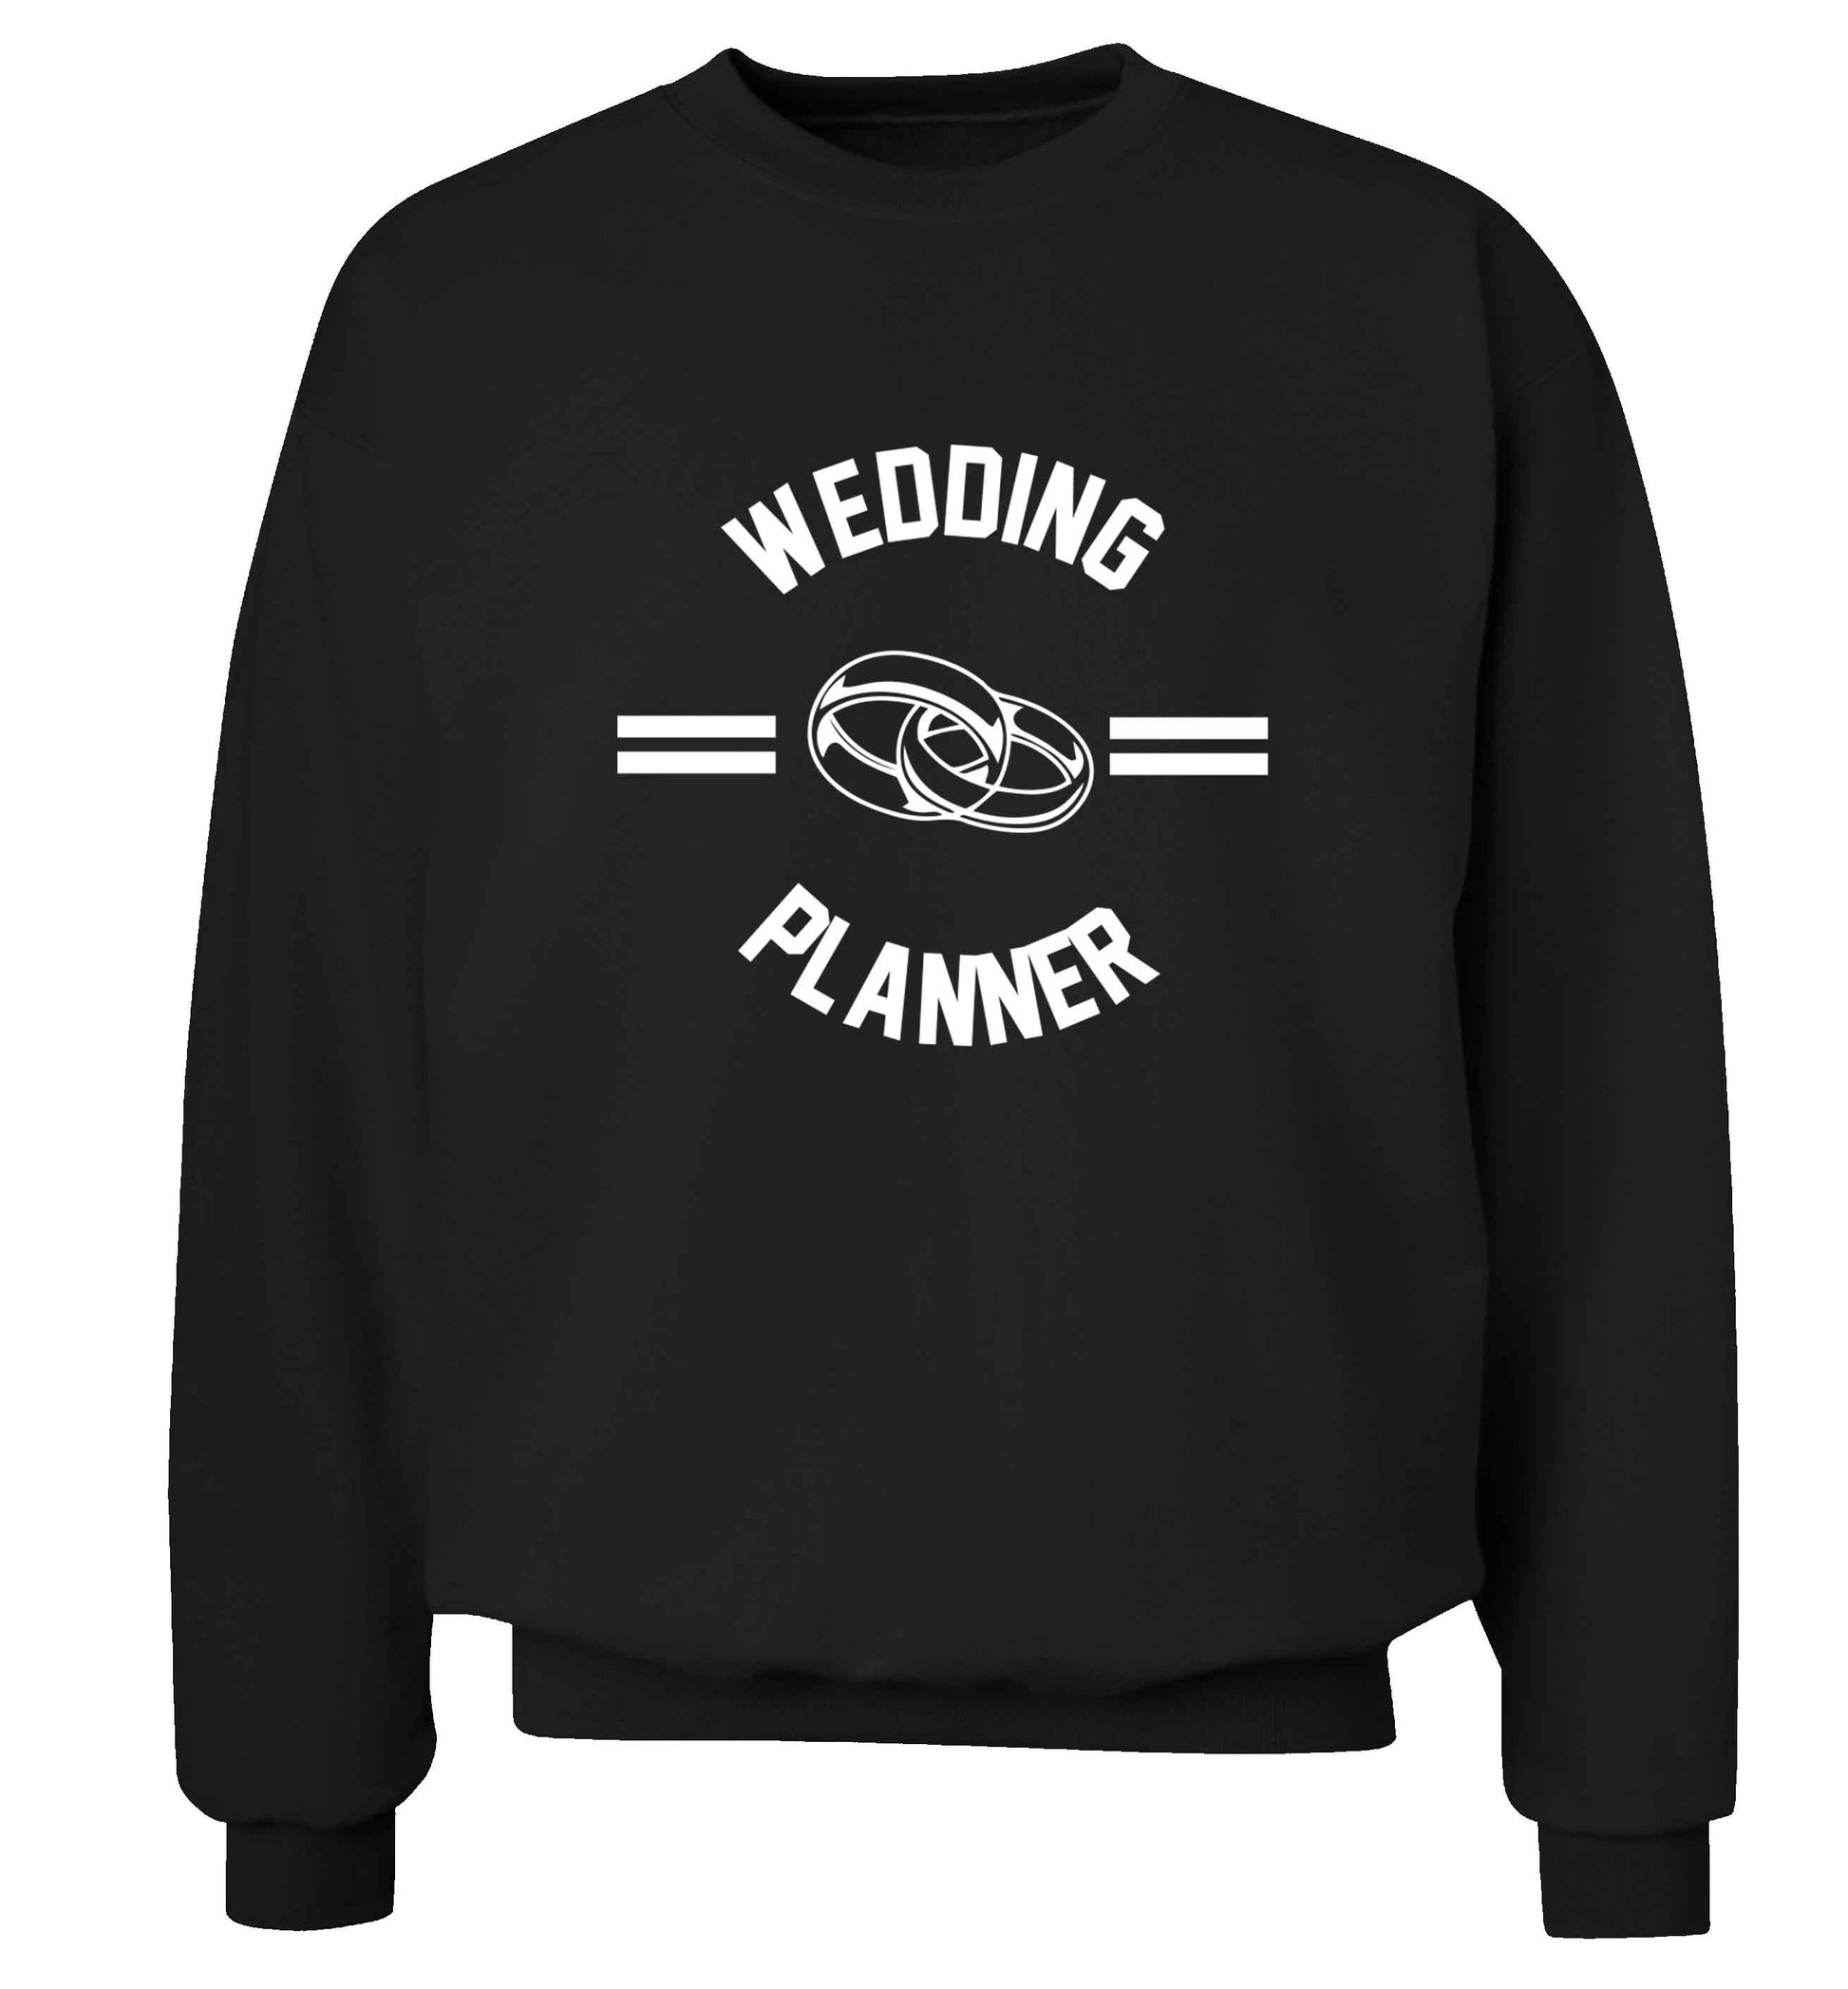 Wedding planner adult's unisex black sweater 2XL